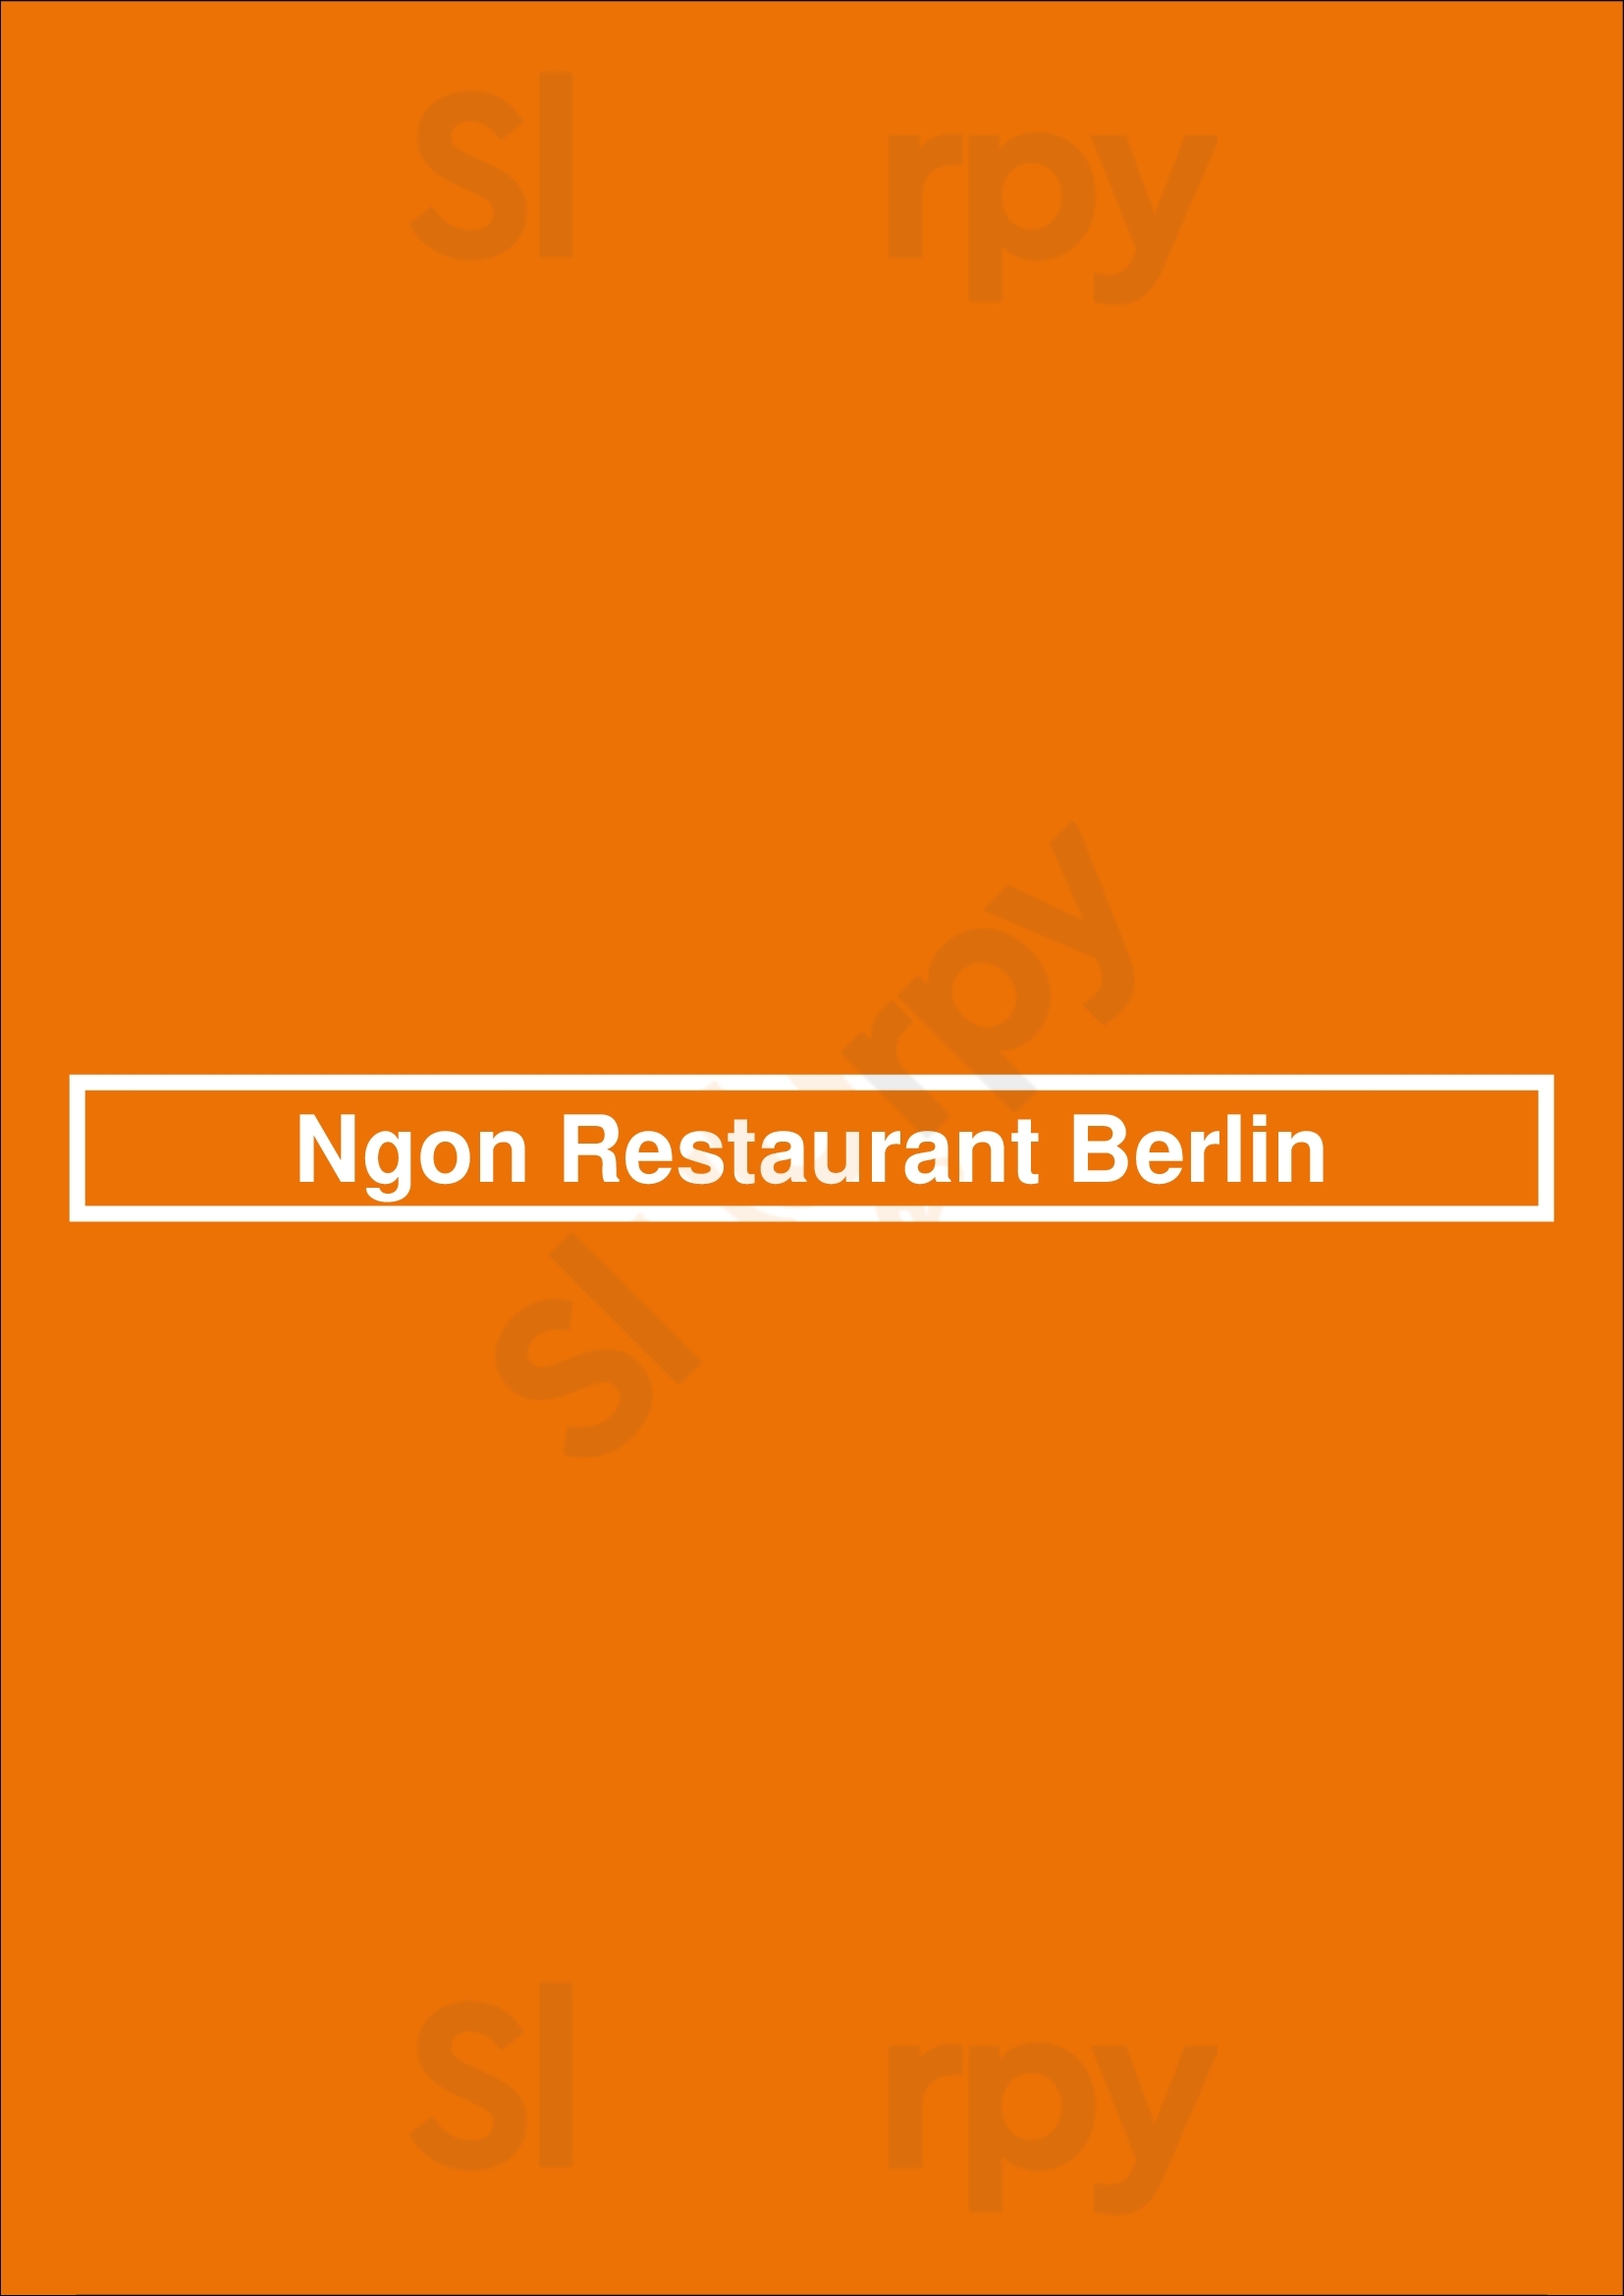 Ngon Restaurant Berlin Berlin Menu - 1